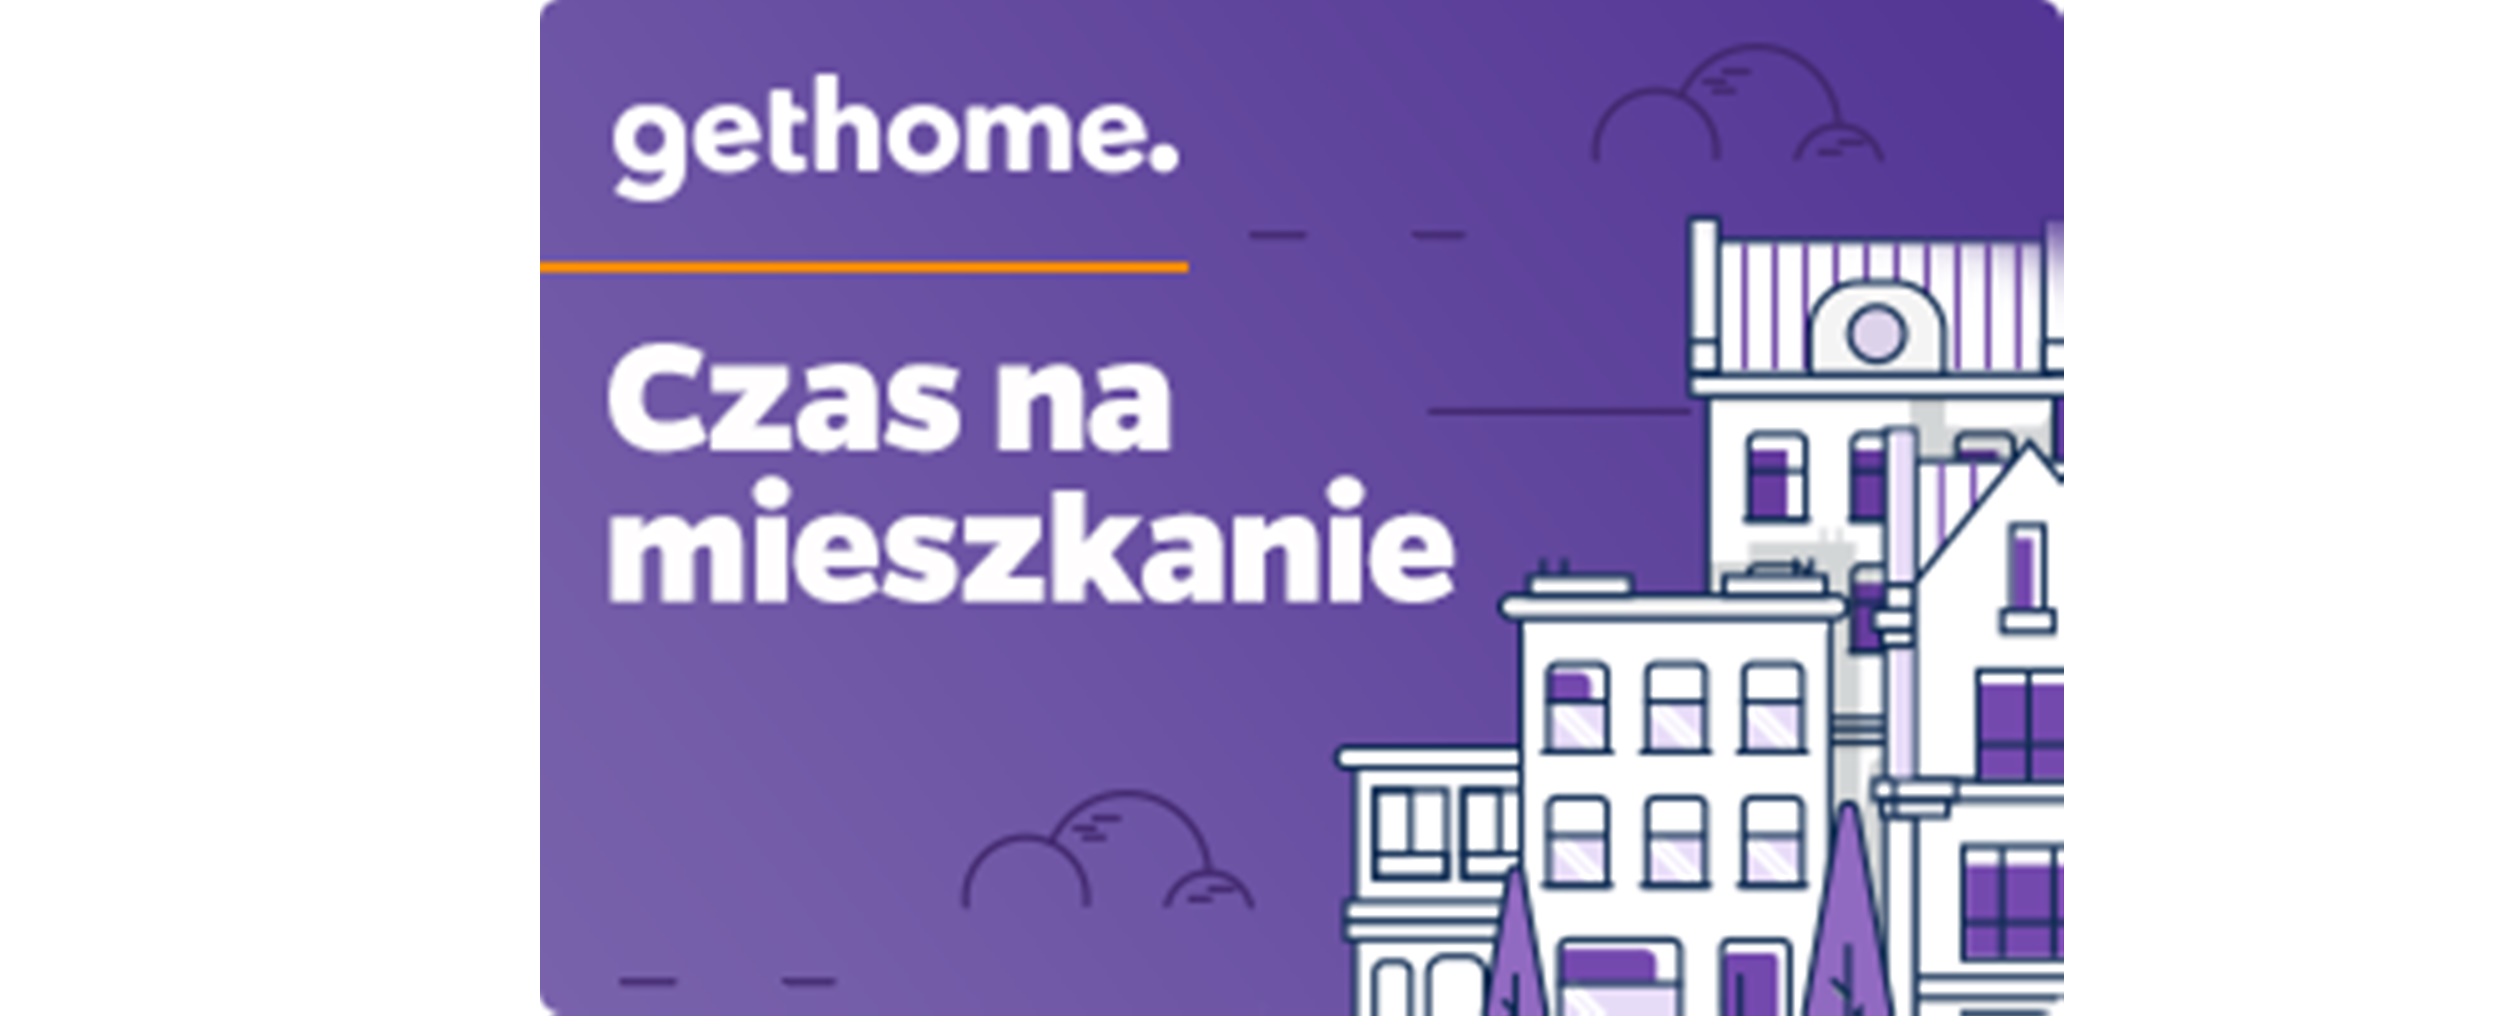 gethome.pl